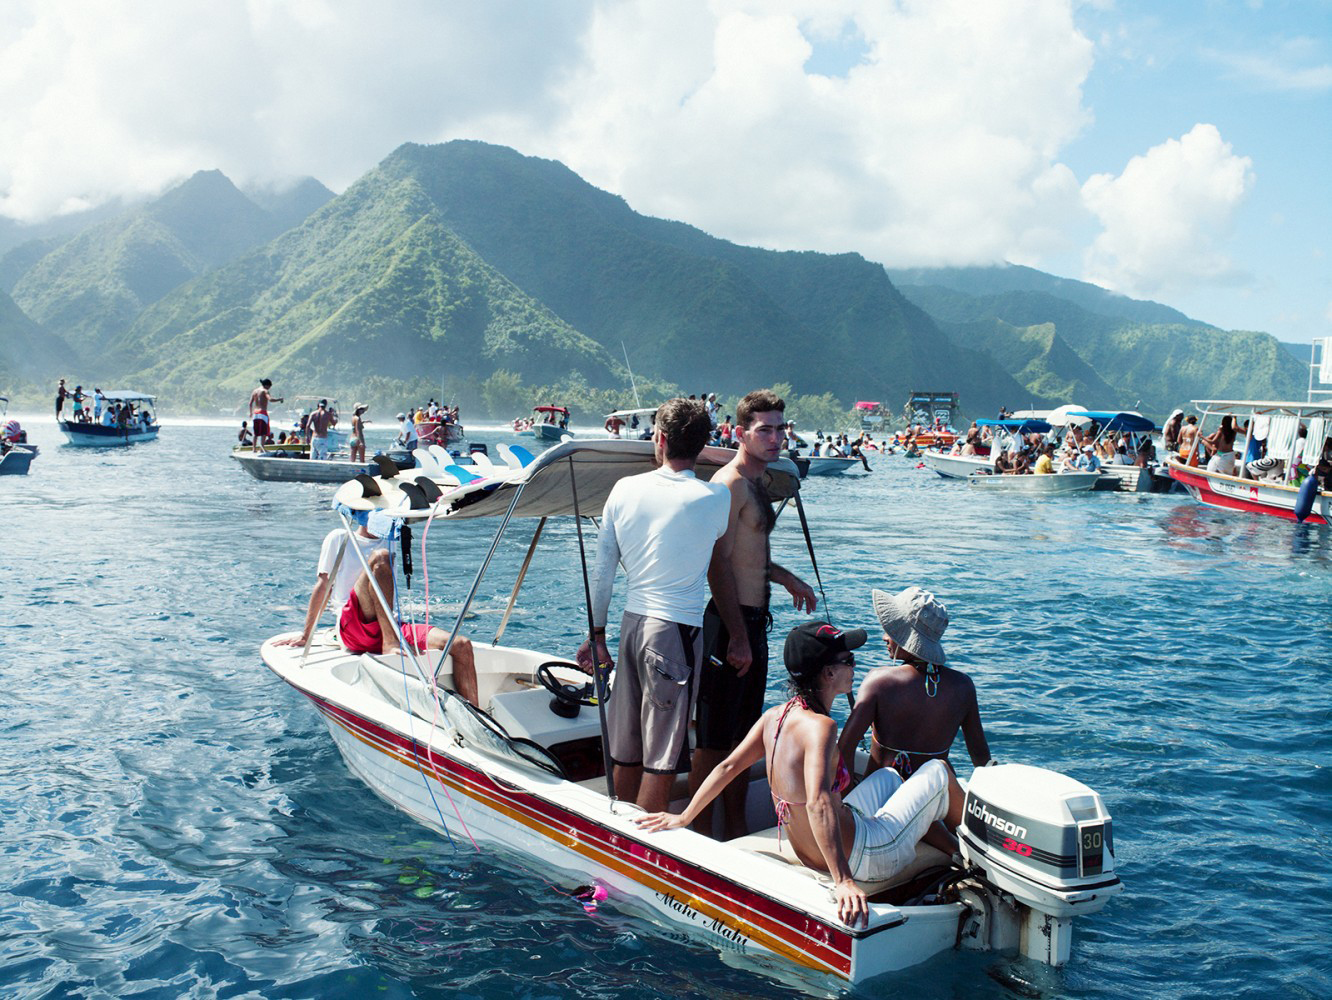  Surfing superwaves of Teahupo’o in Tahiti.&nbsp; 